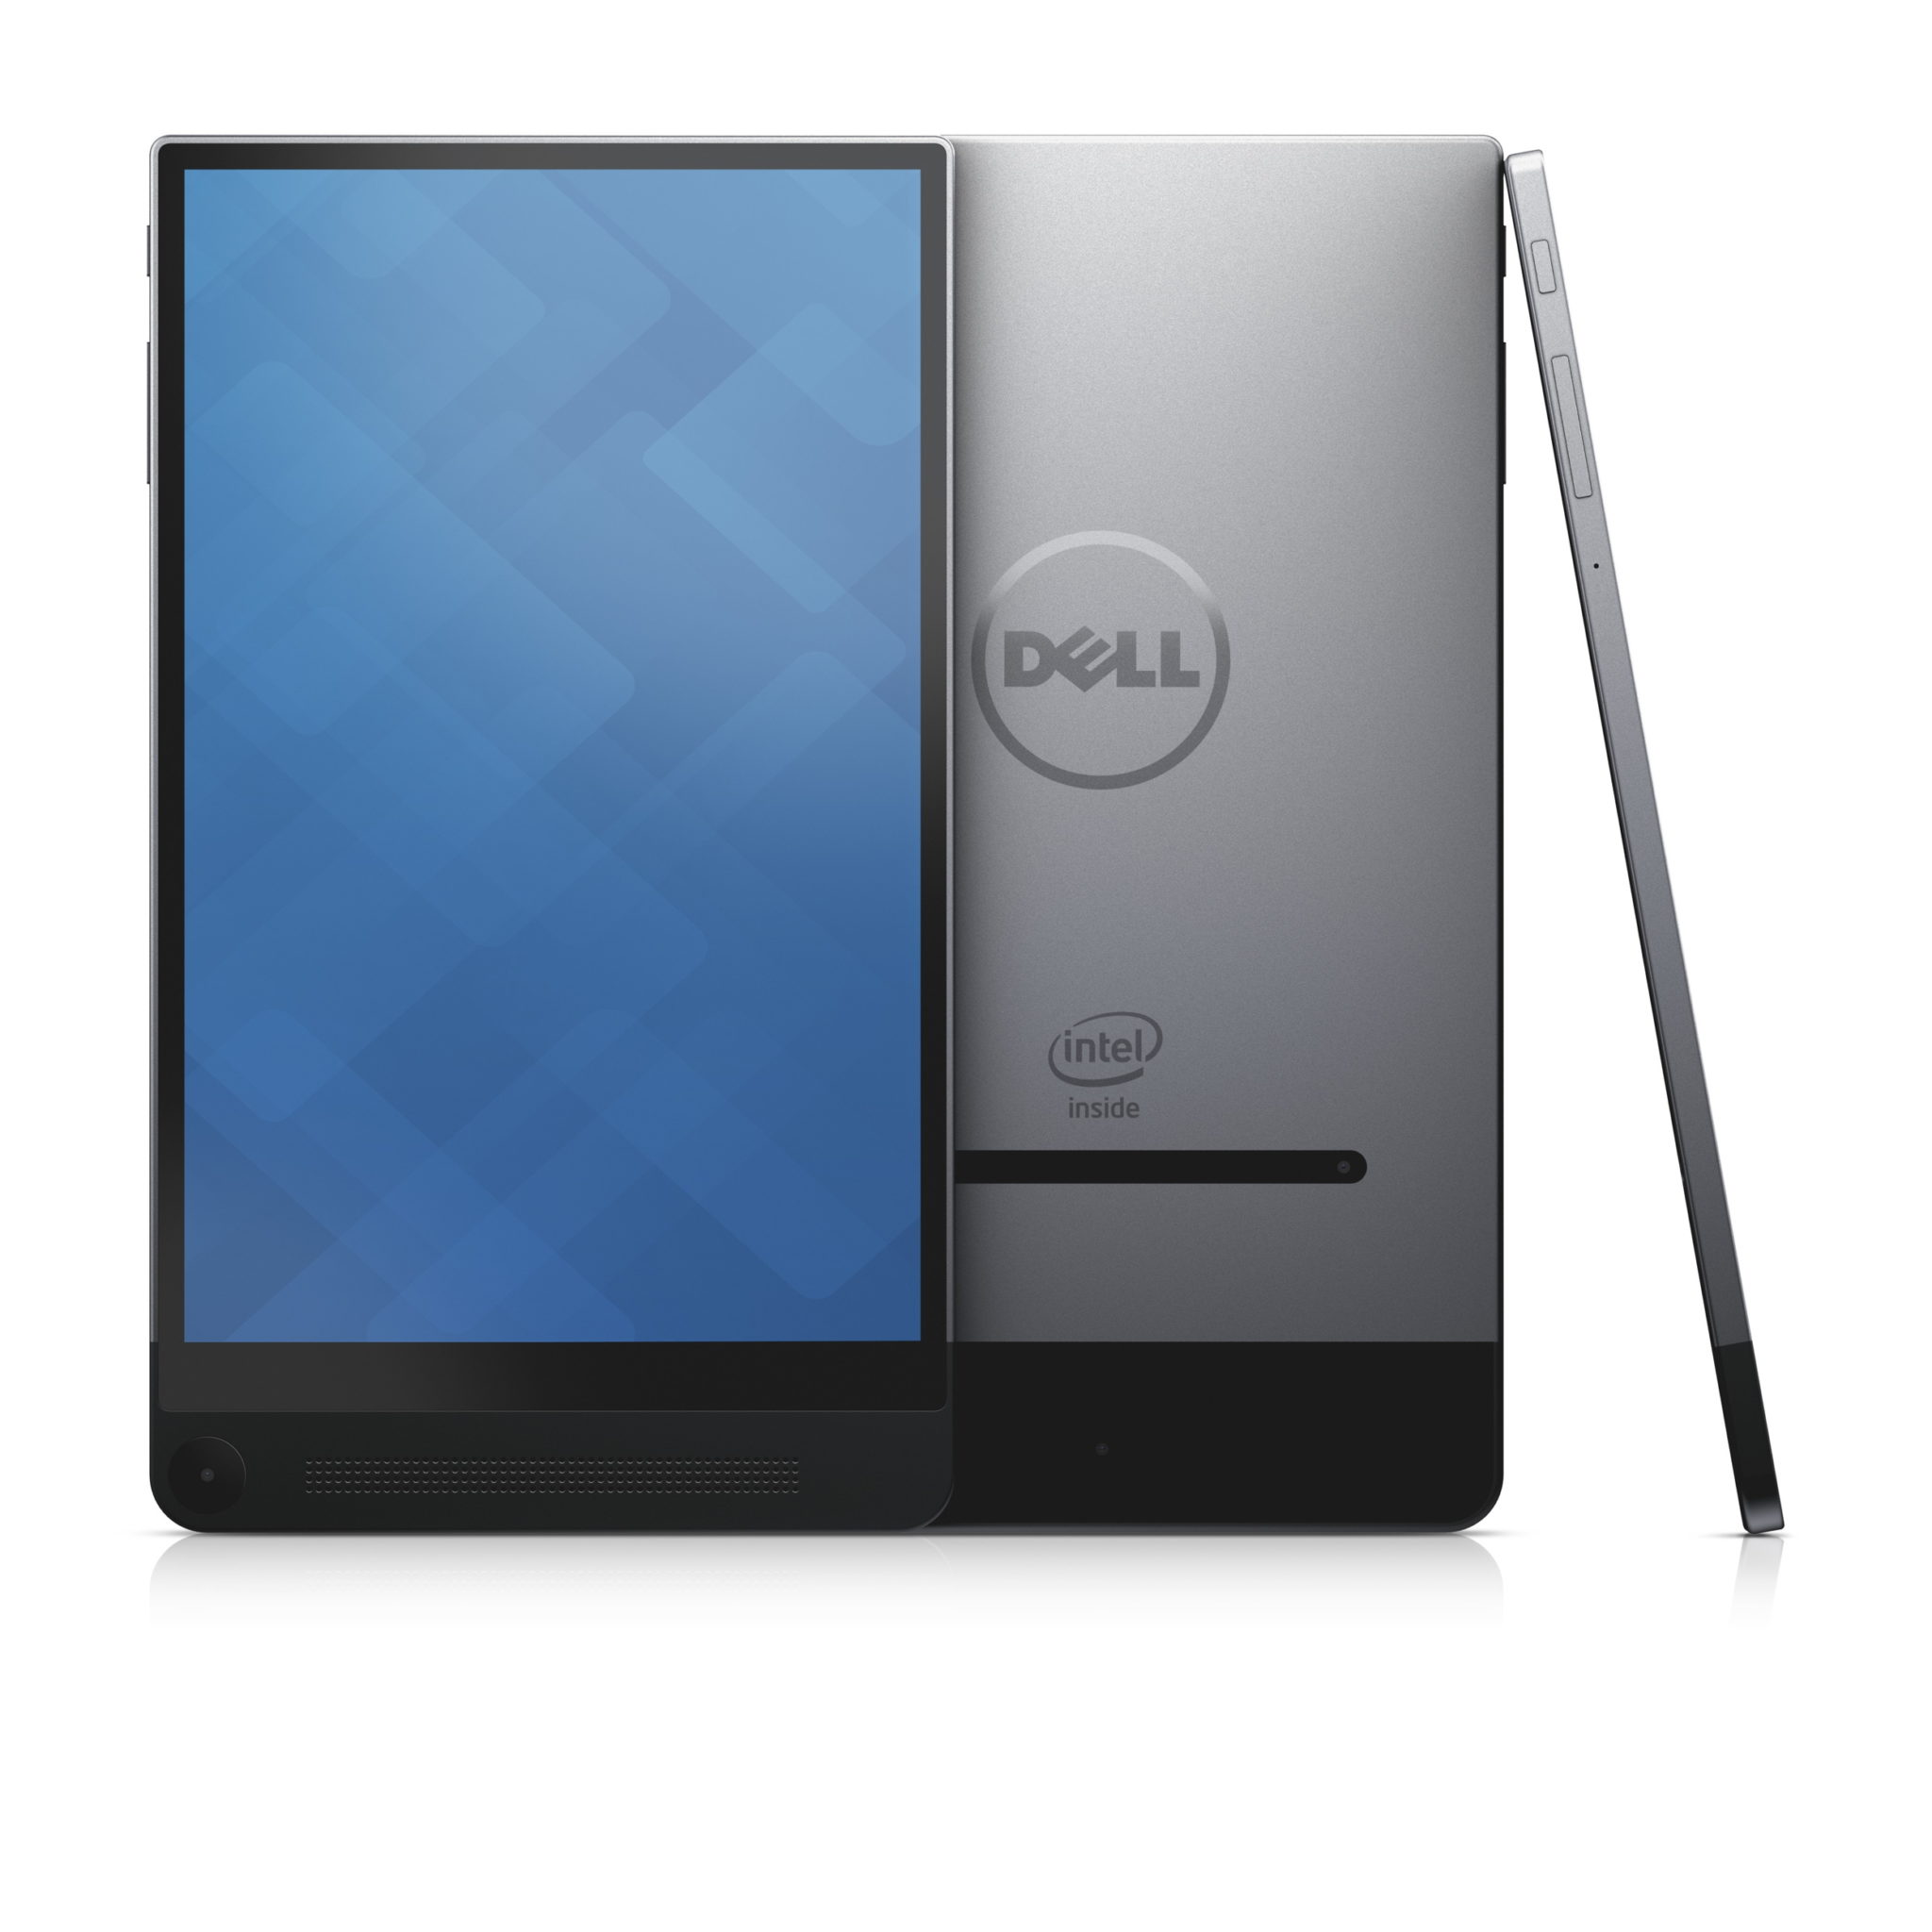 Dell anuncia la Venue 8 7000